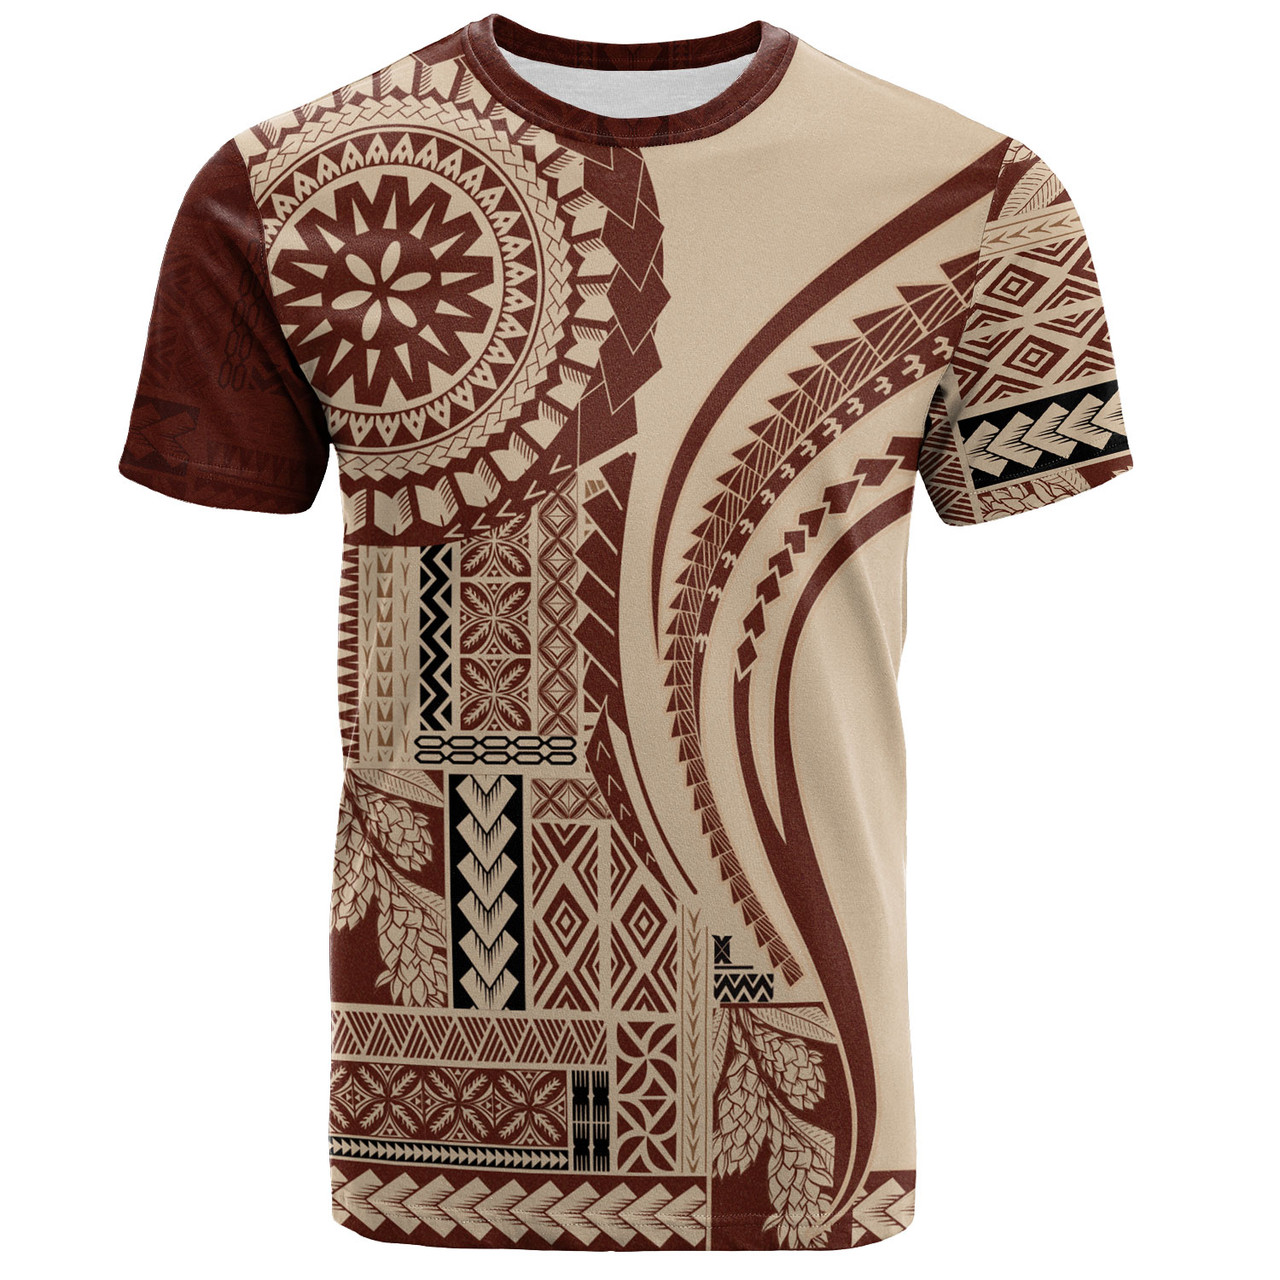 Samoa T-Shirt Samoan Siapo Brown Design